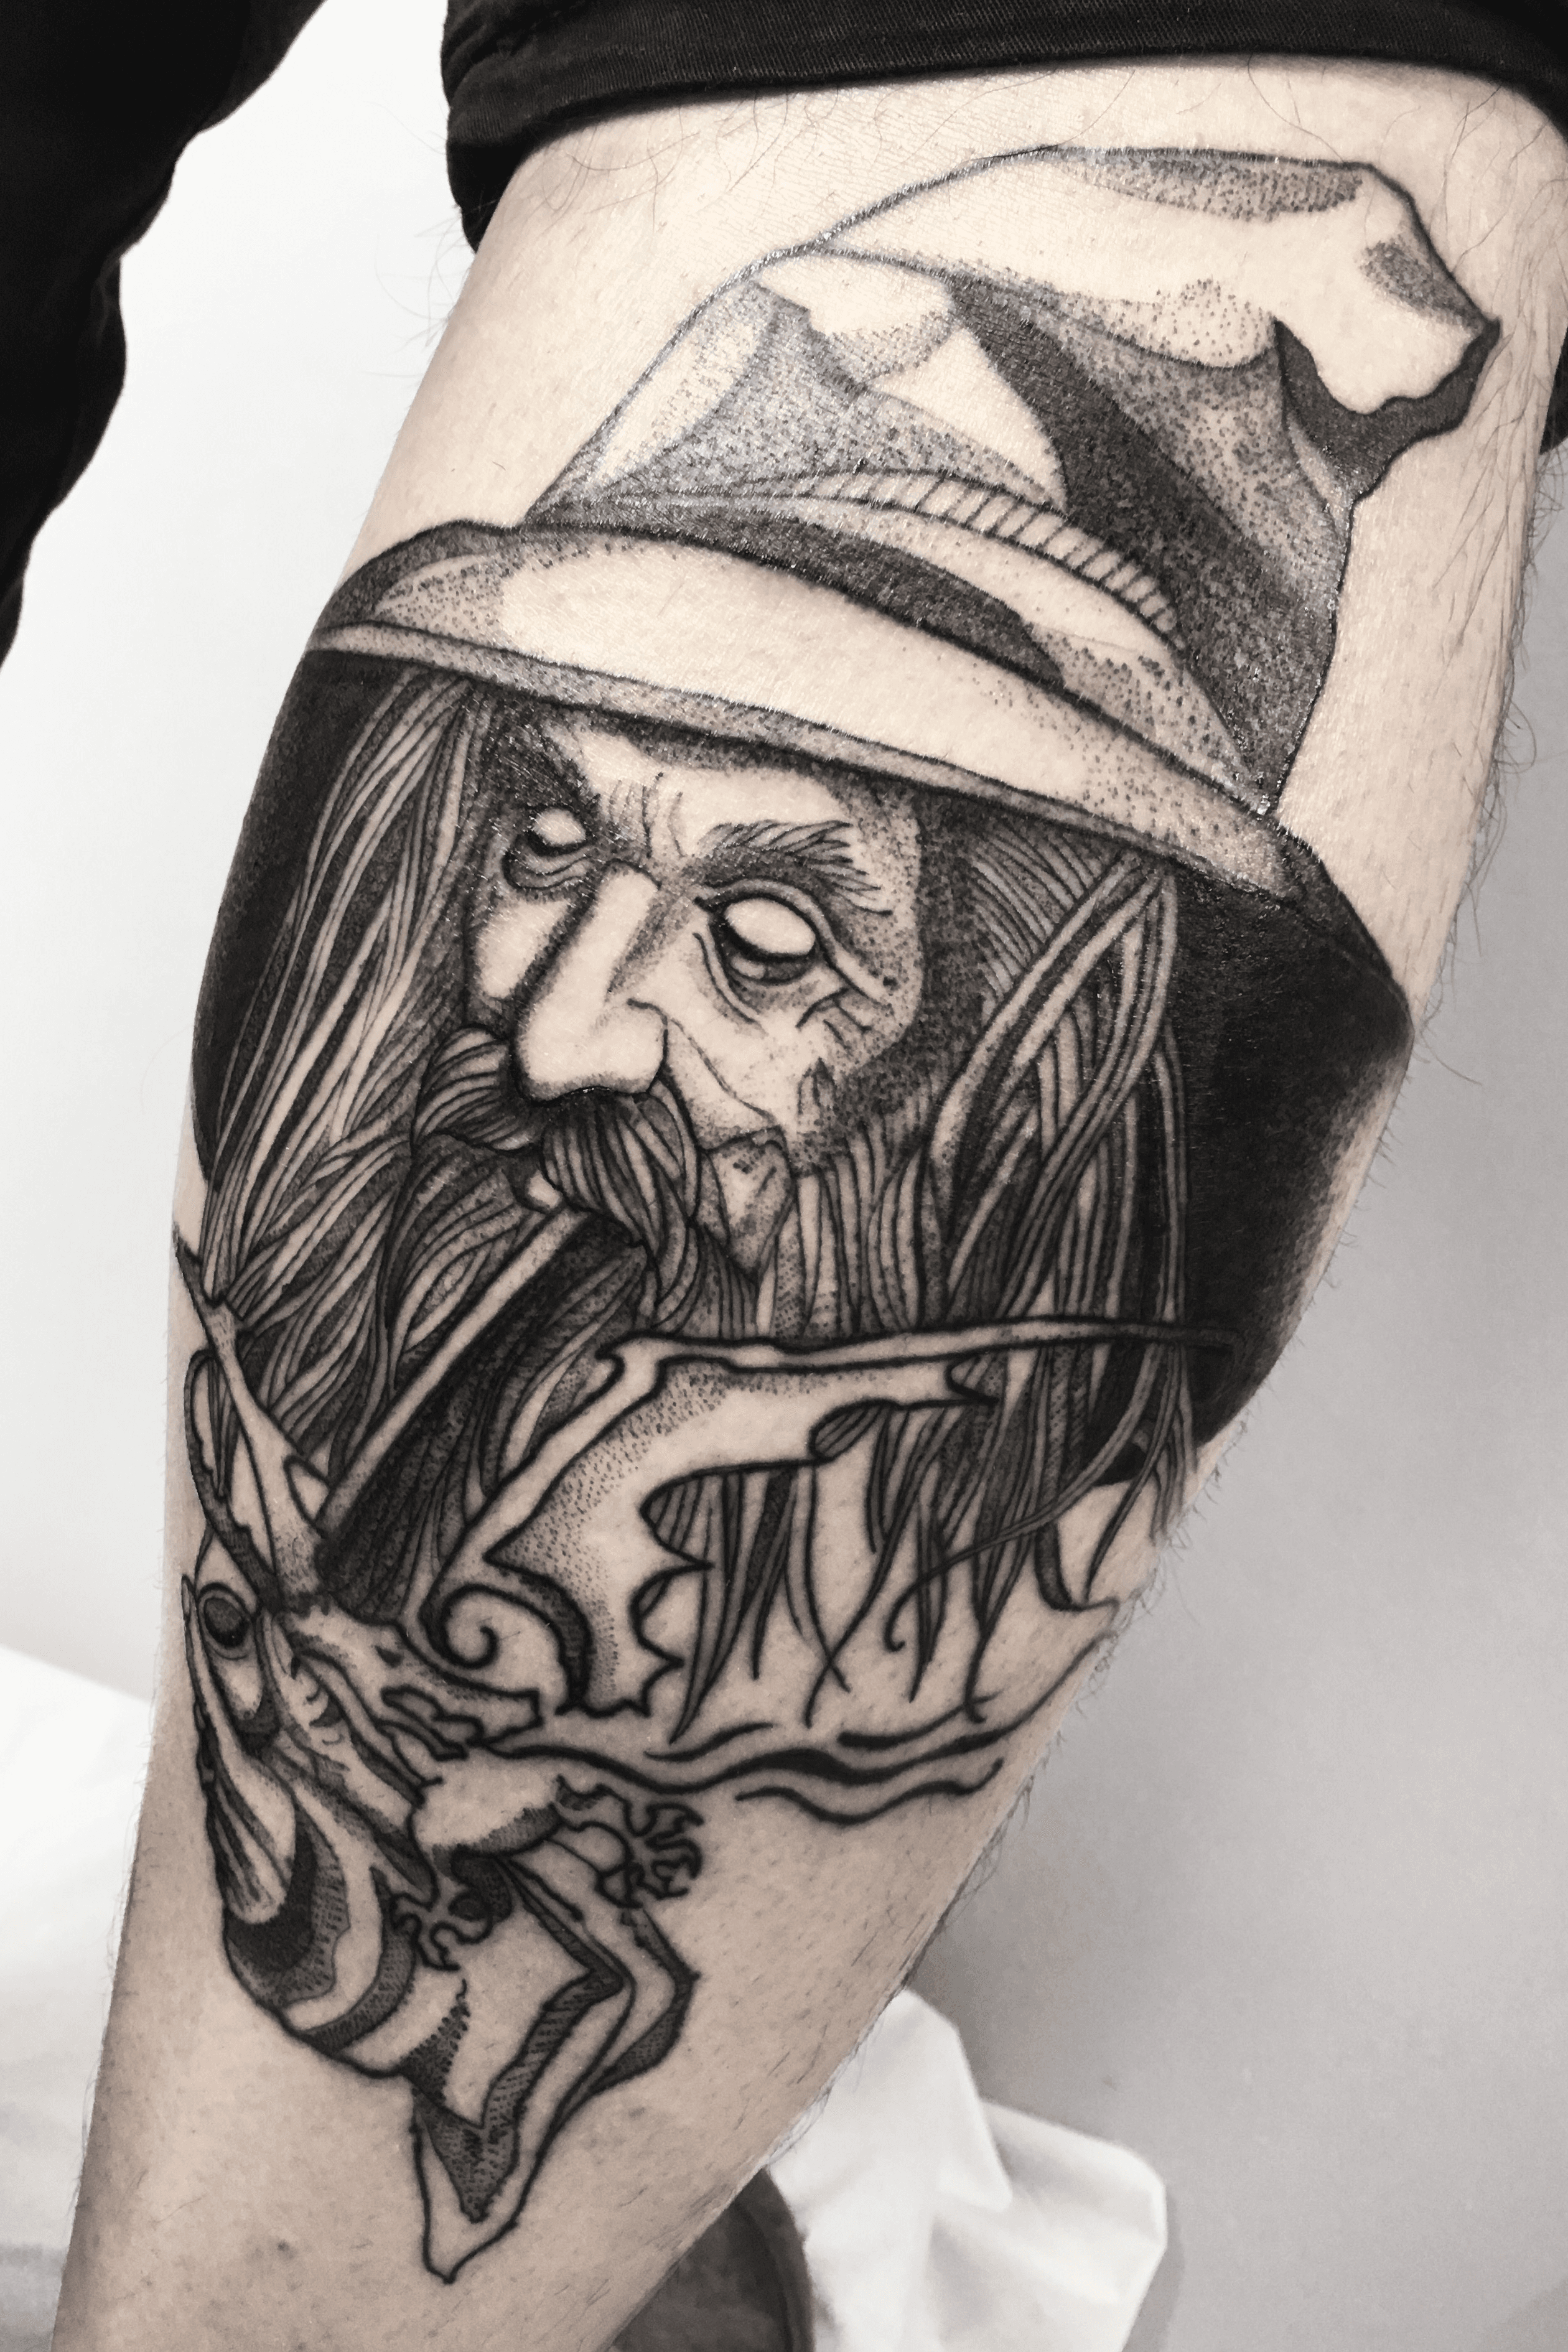 Robert Pawlewski Custom Artist  Random wizard of oz sketch tattoo  illustration